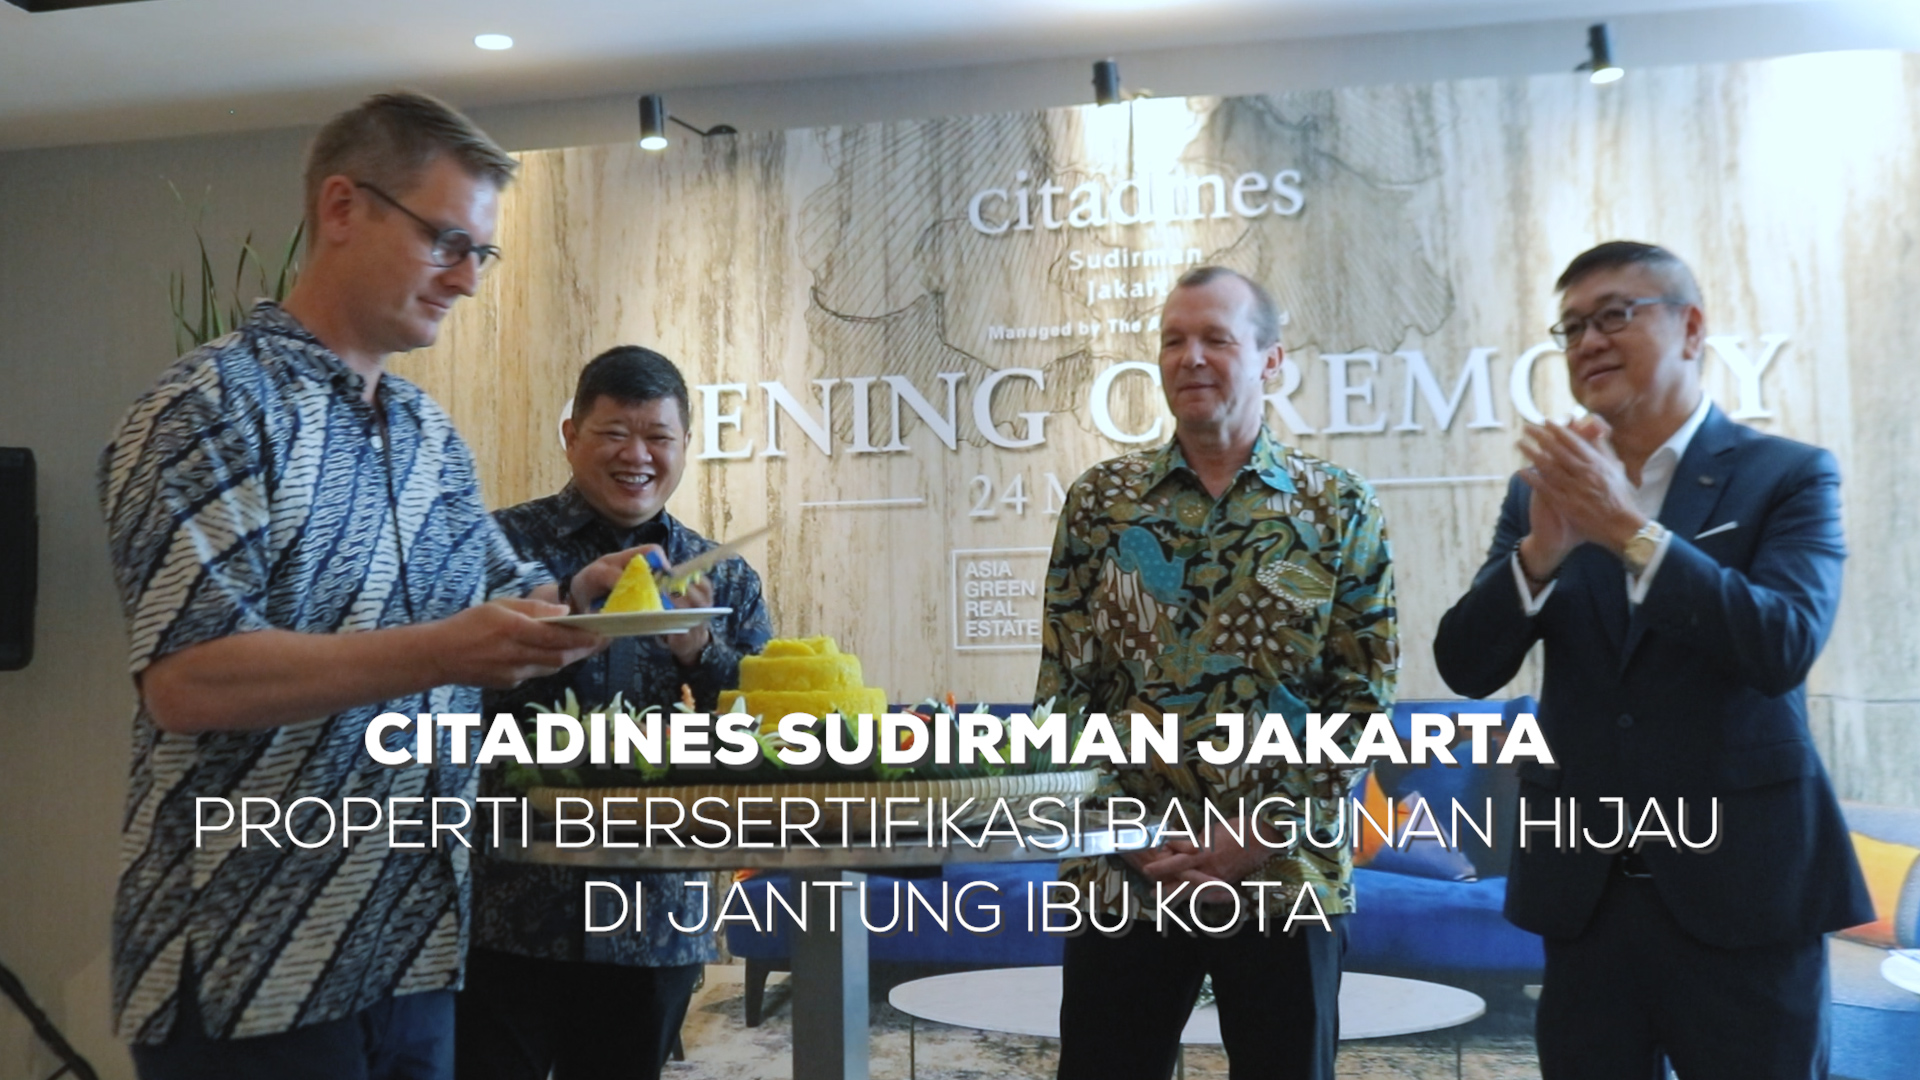 Citadines Sudirman Jakarta, Properti Bersertifikasi Bangunan Hijau di Jantung Ibu Kota